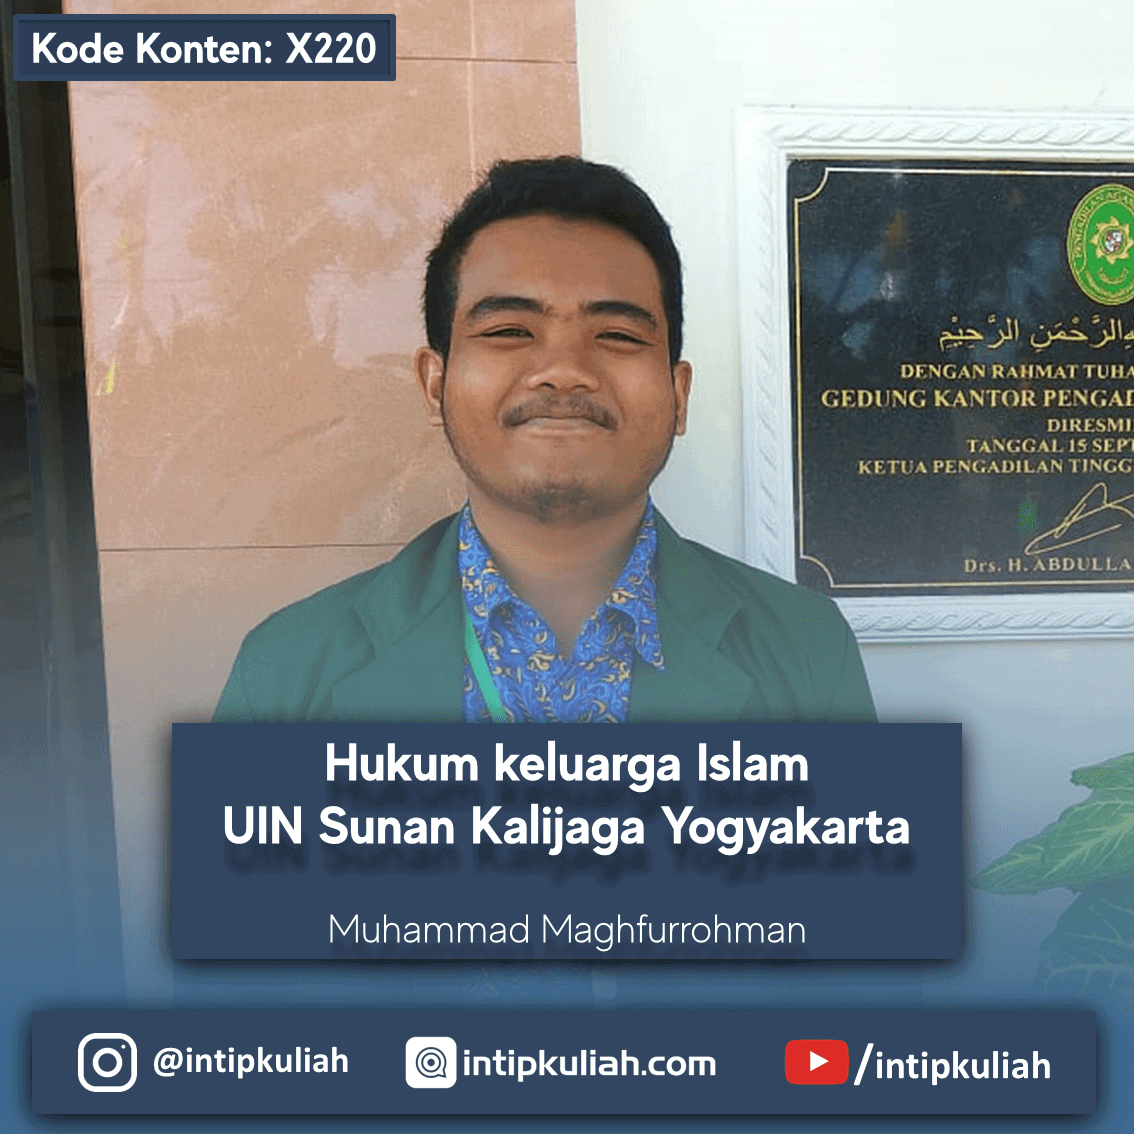 Hukum Keluarga Islam UIN Sunan Kalijaga Yogyakarta (Maghfur)